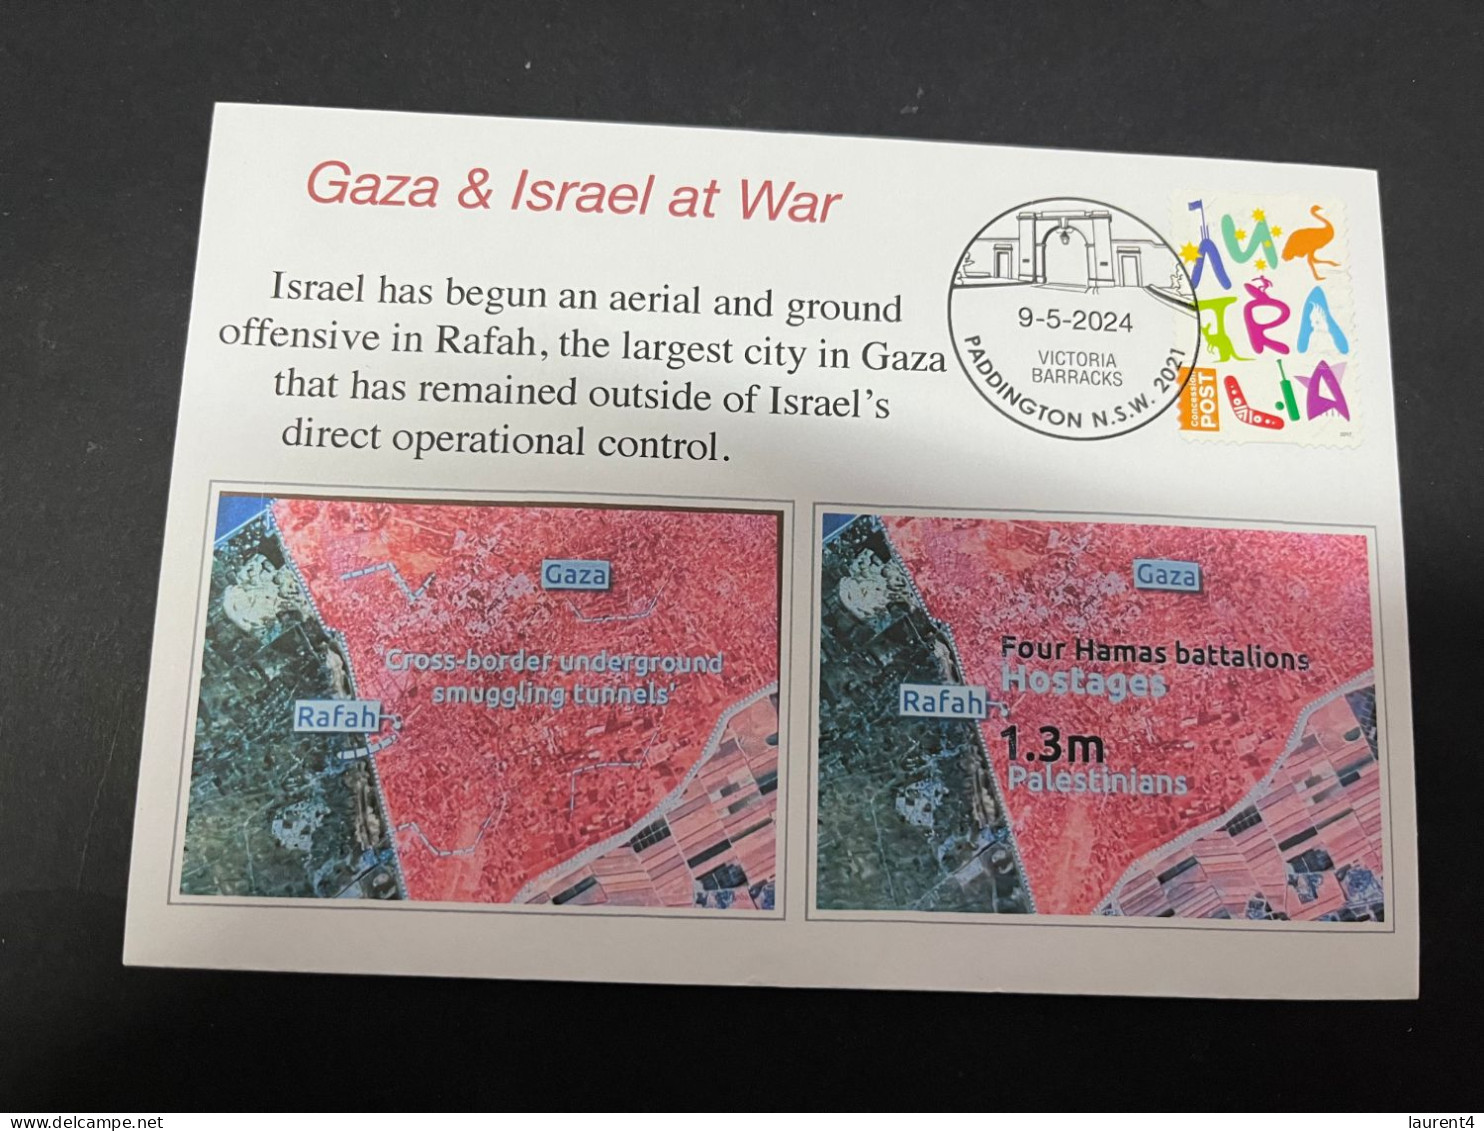 10-5-2024 (4 Z 37) GAZA War - Israel Begin Ground & Aerial Offensive In Rafah - Militaria